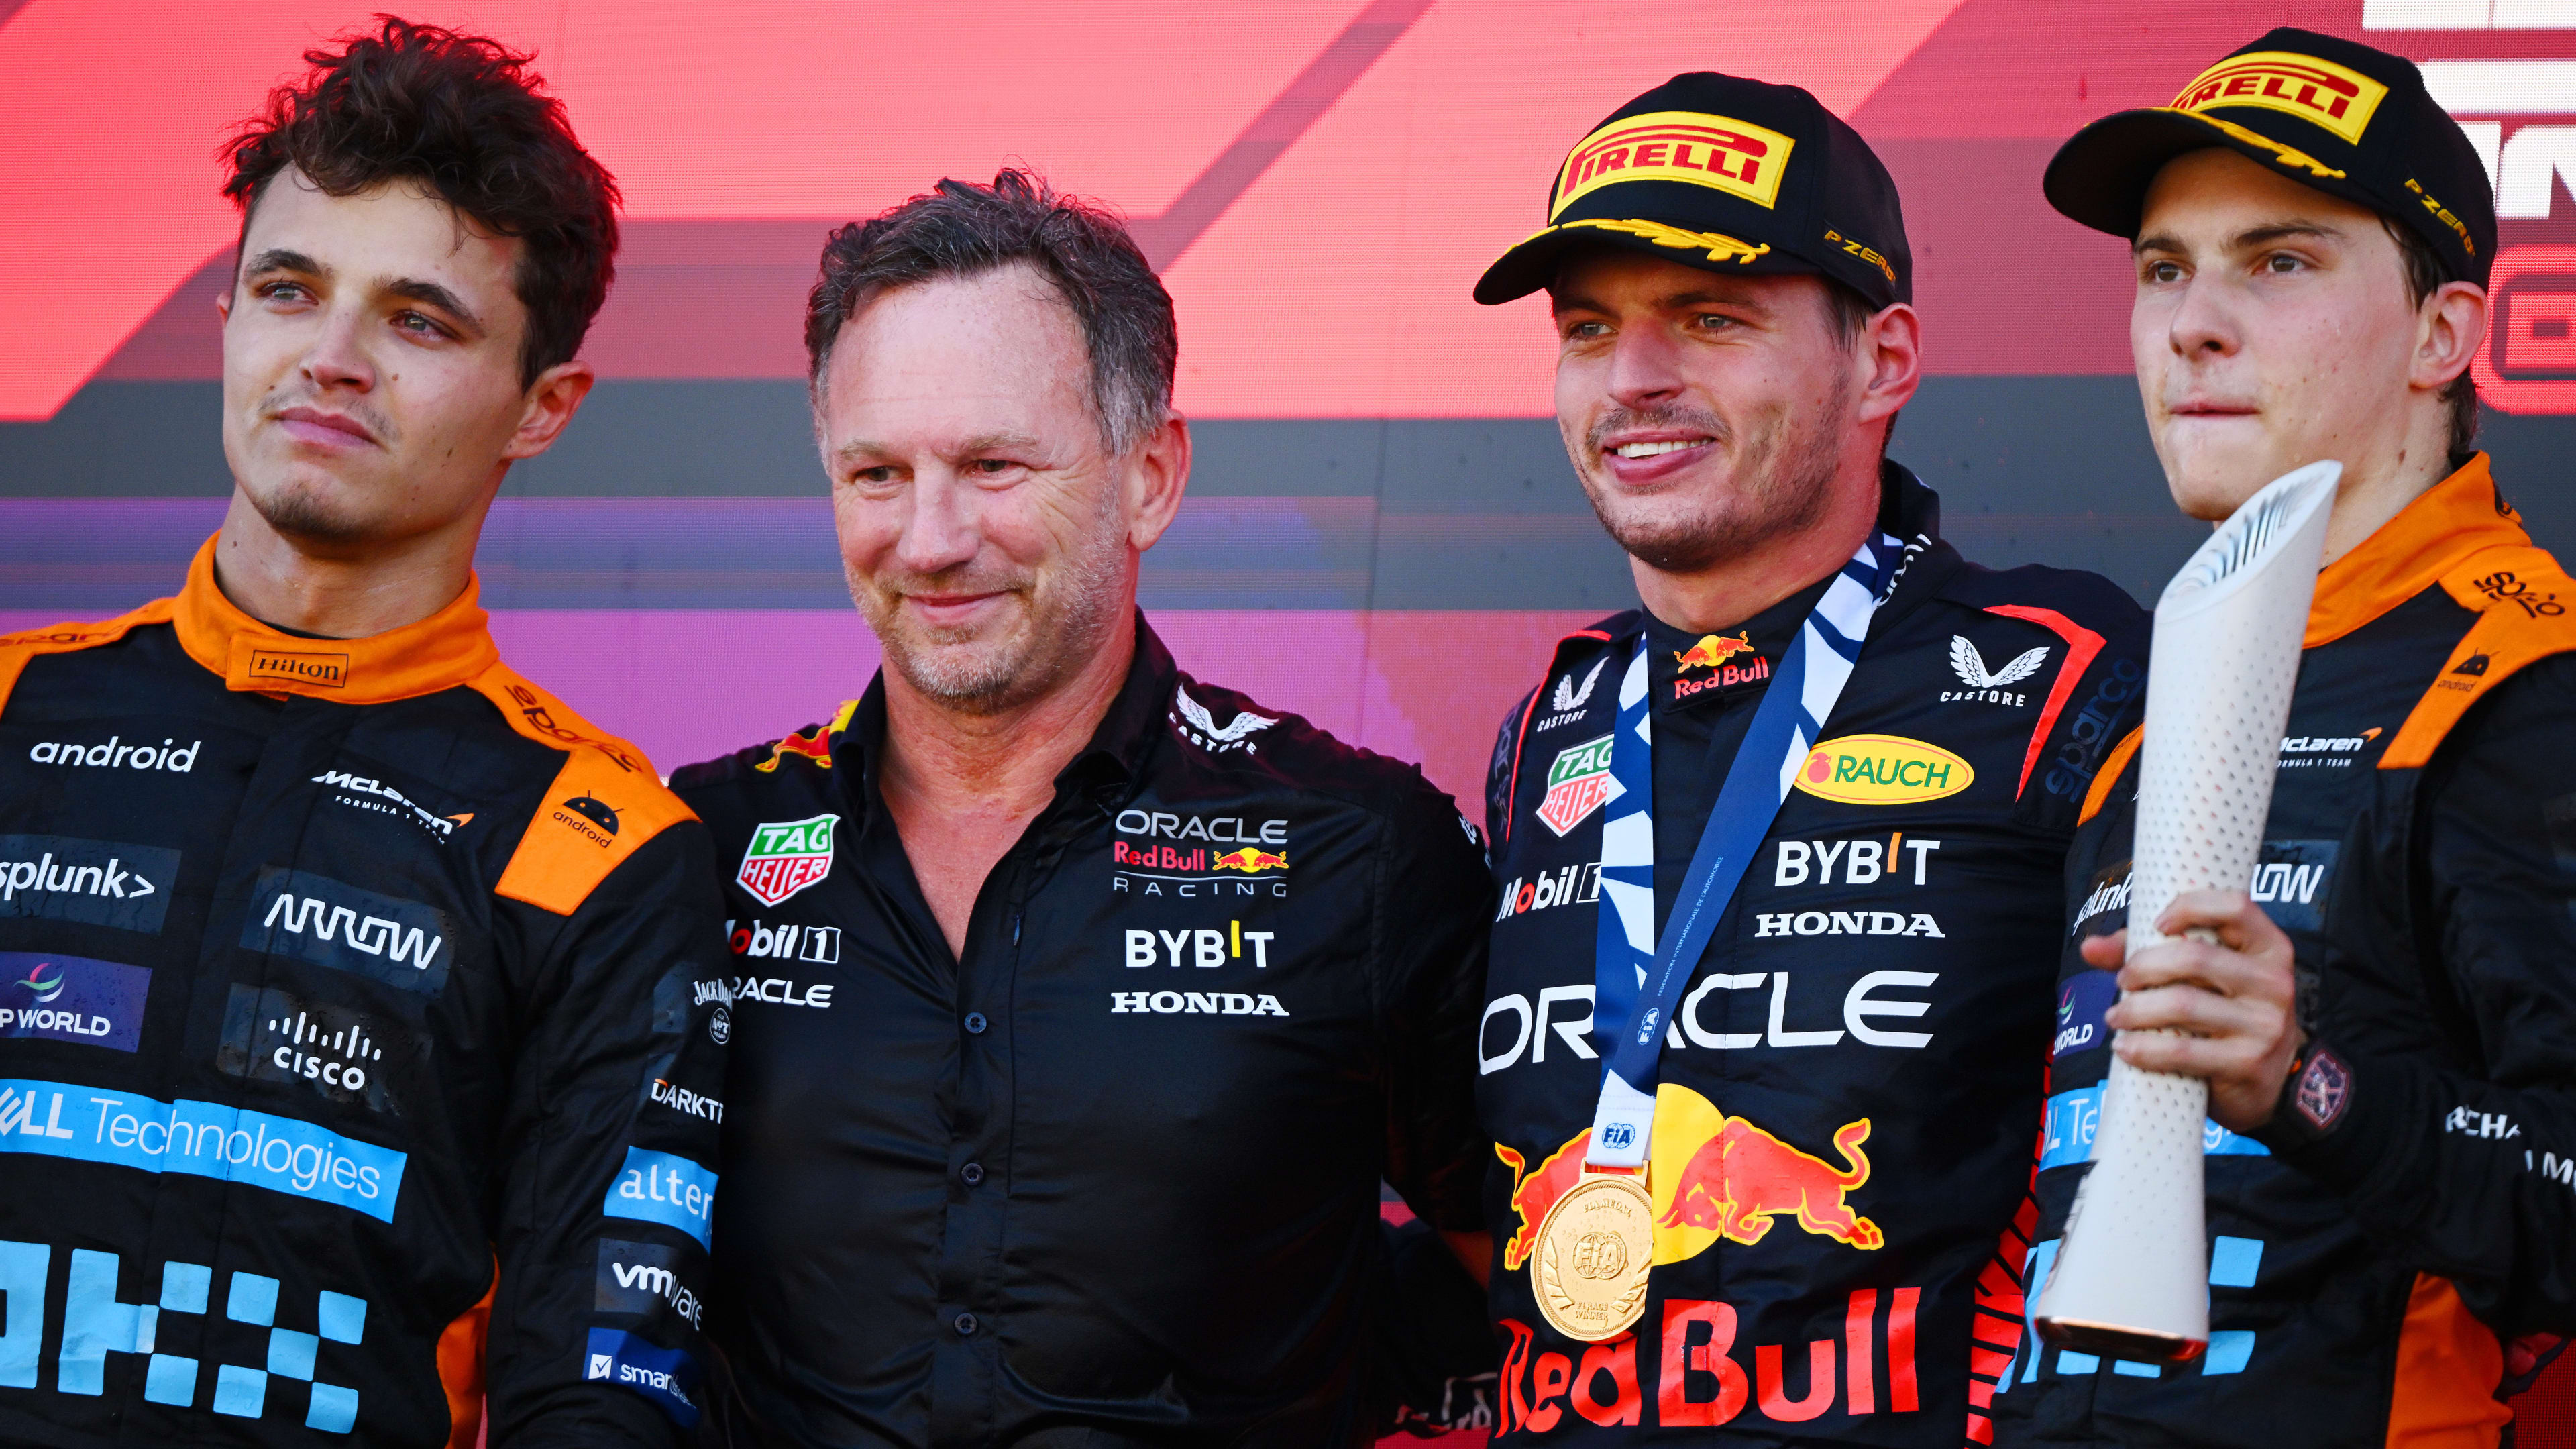 SUZUKA, JAPAN - SEPTEMBER 24: Race winner Max Verstappen of the Netherlands and Oracle Red Bull